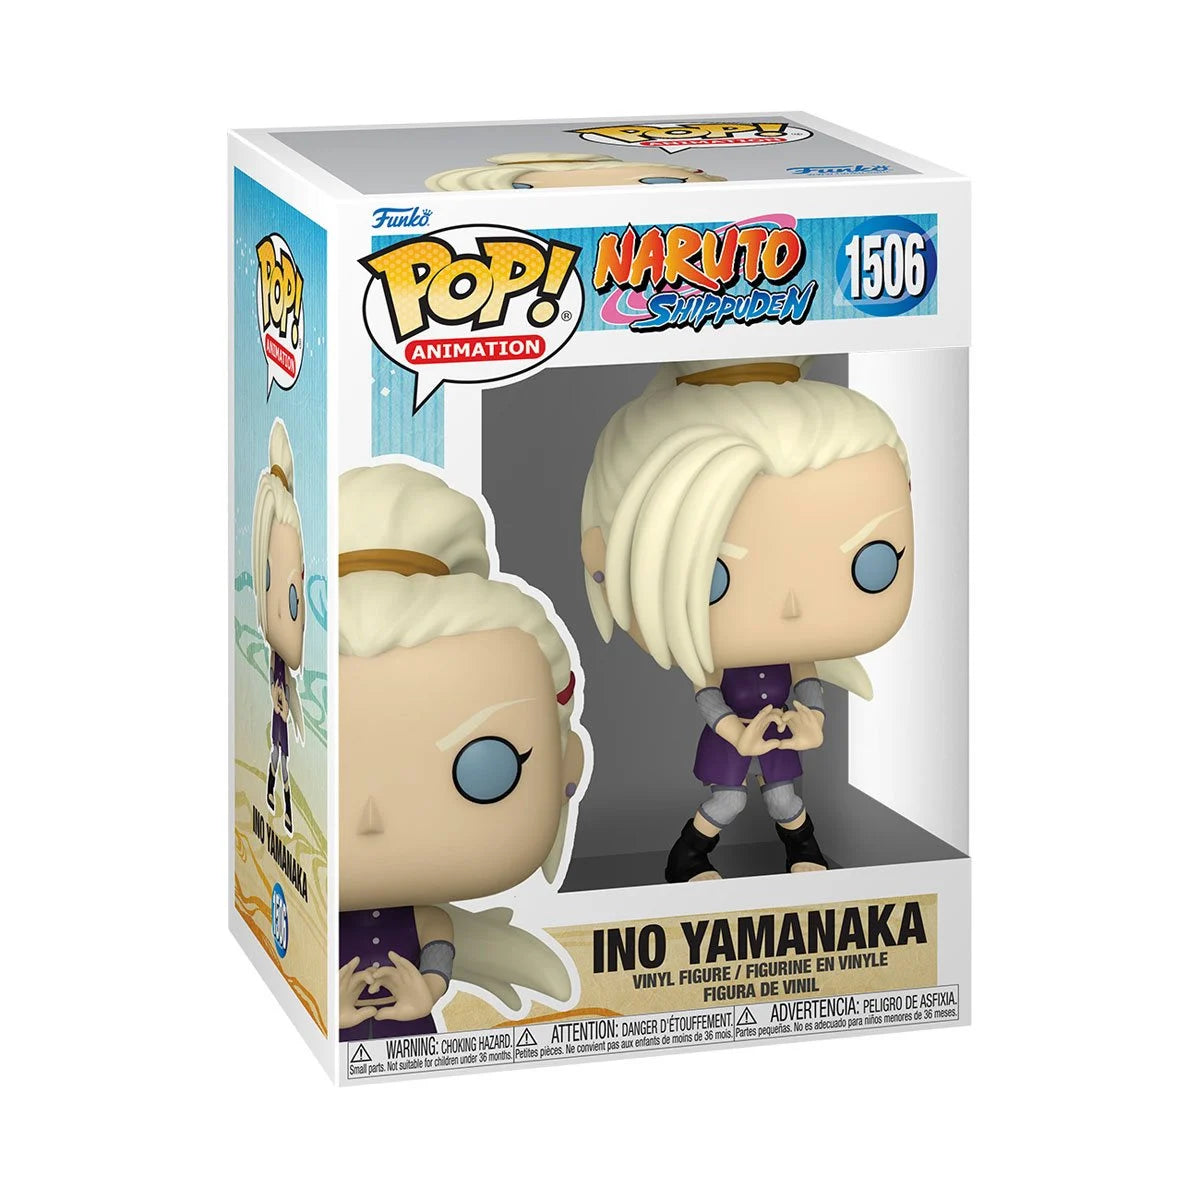 Naruto: Shippuden Ino Yamanaka Funko Pop!